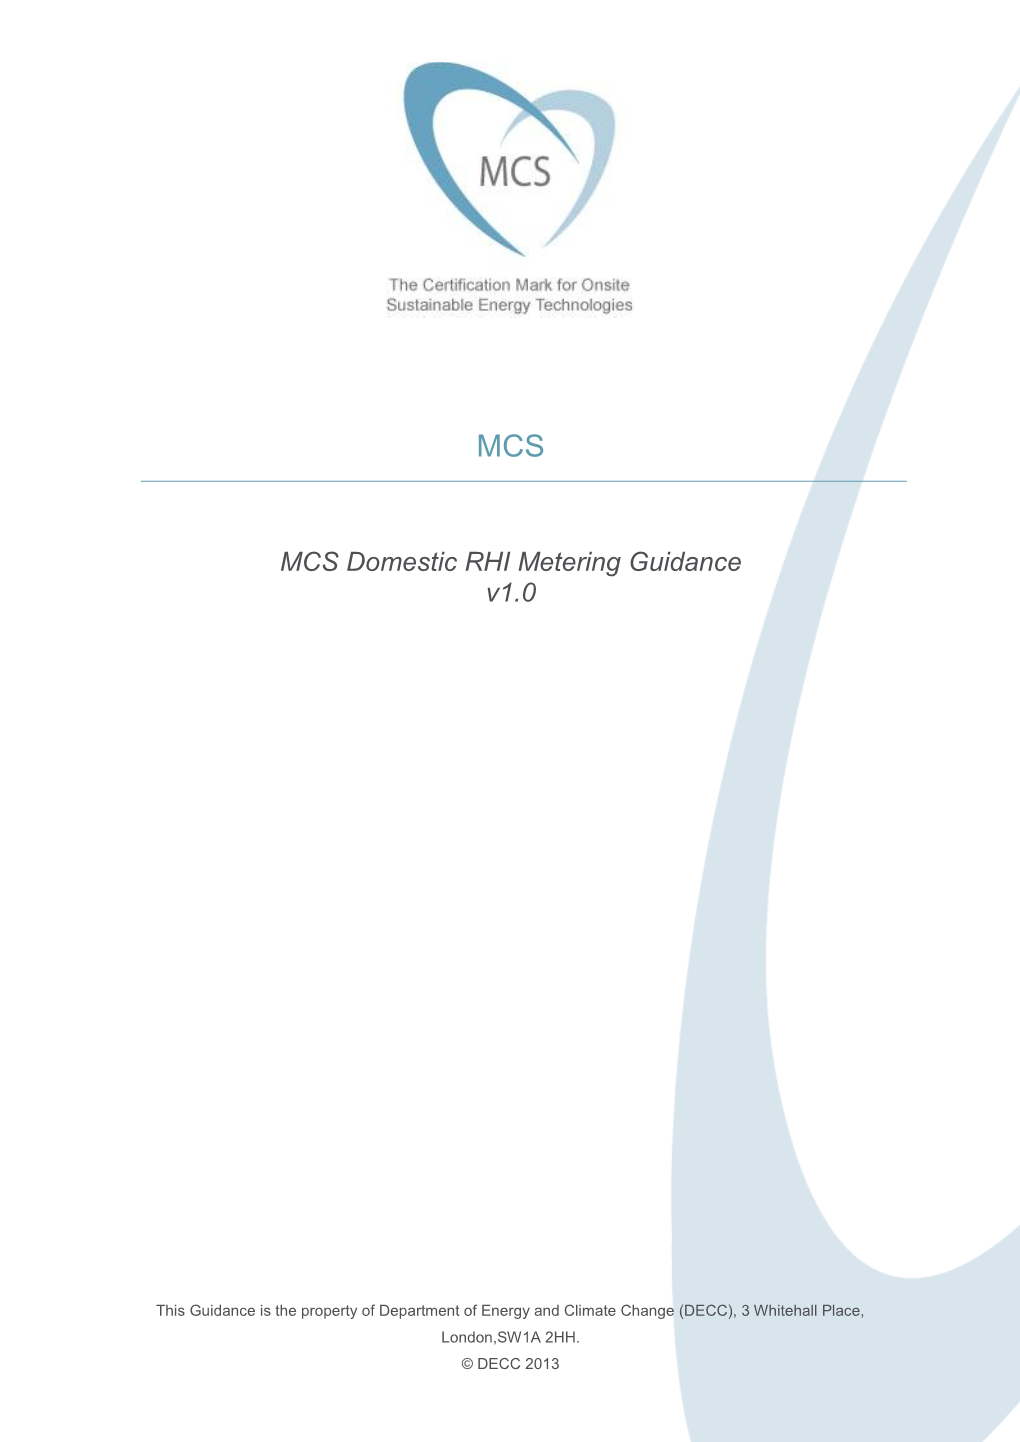 Microgeneration Installation Standard: MCS 001